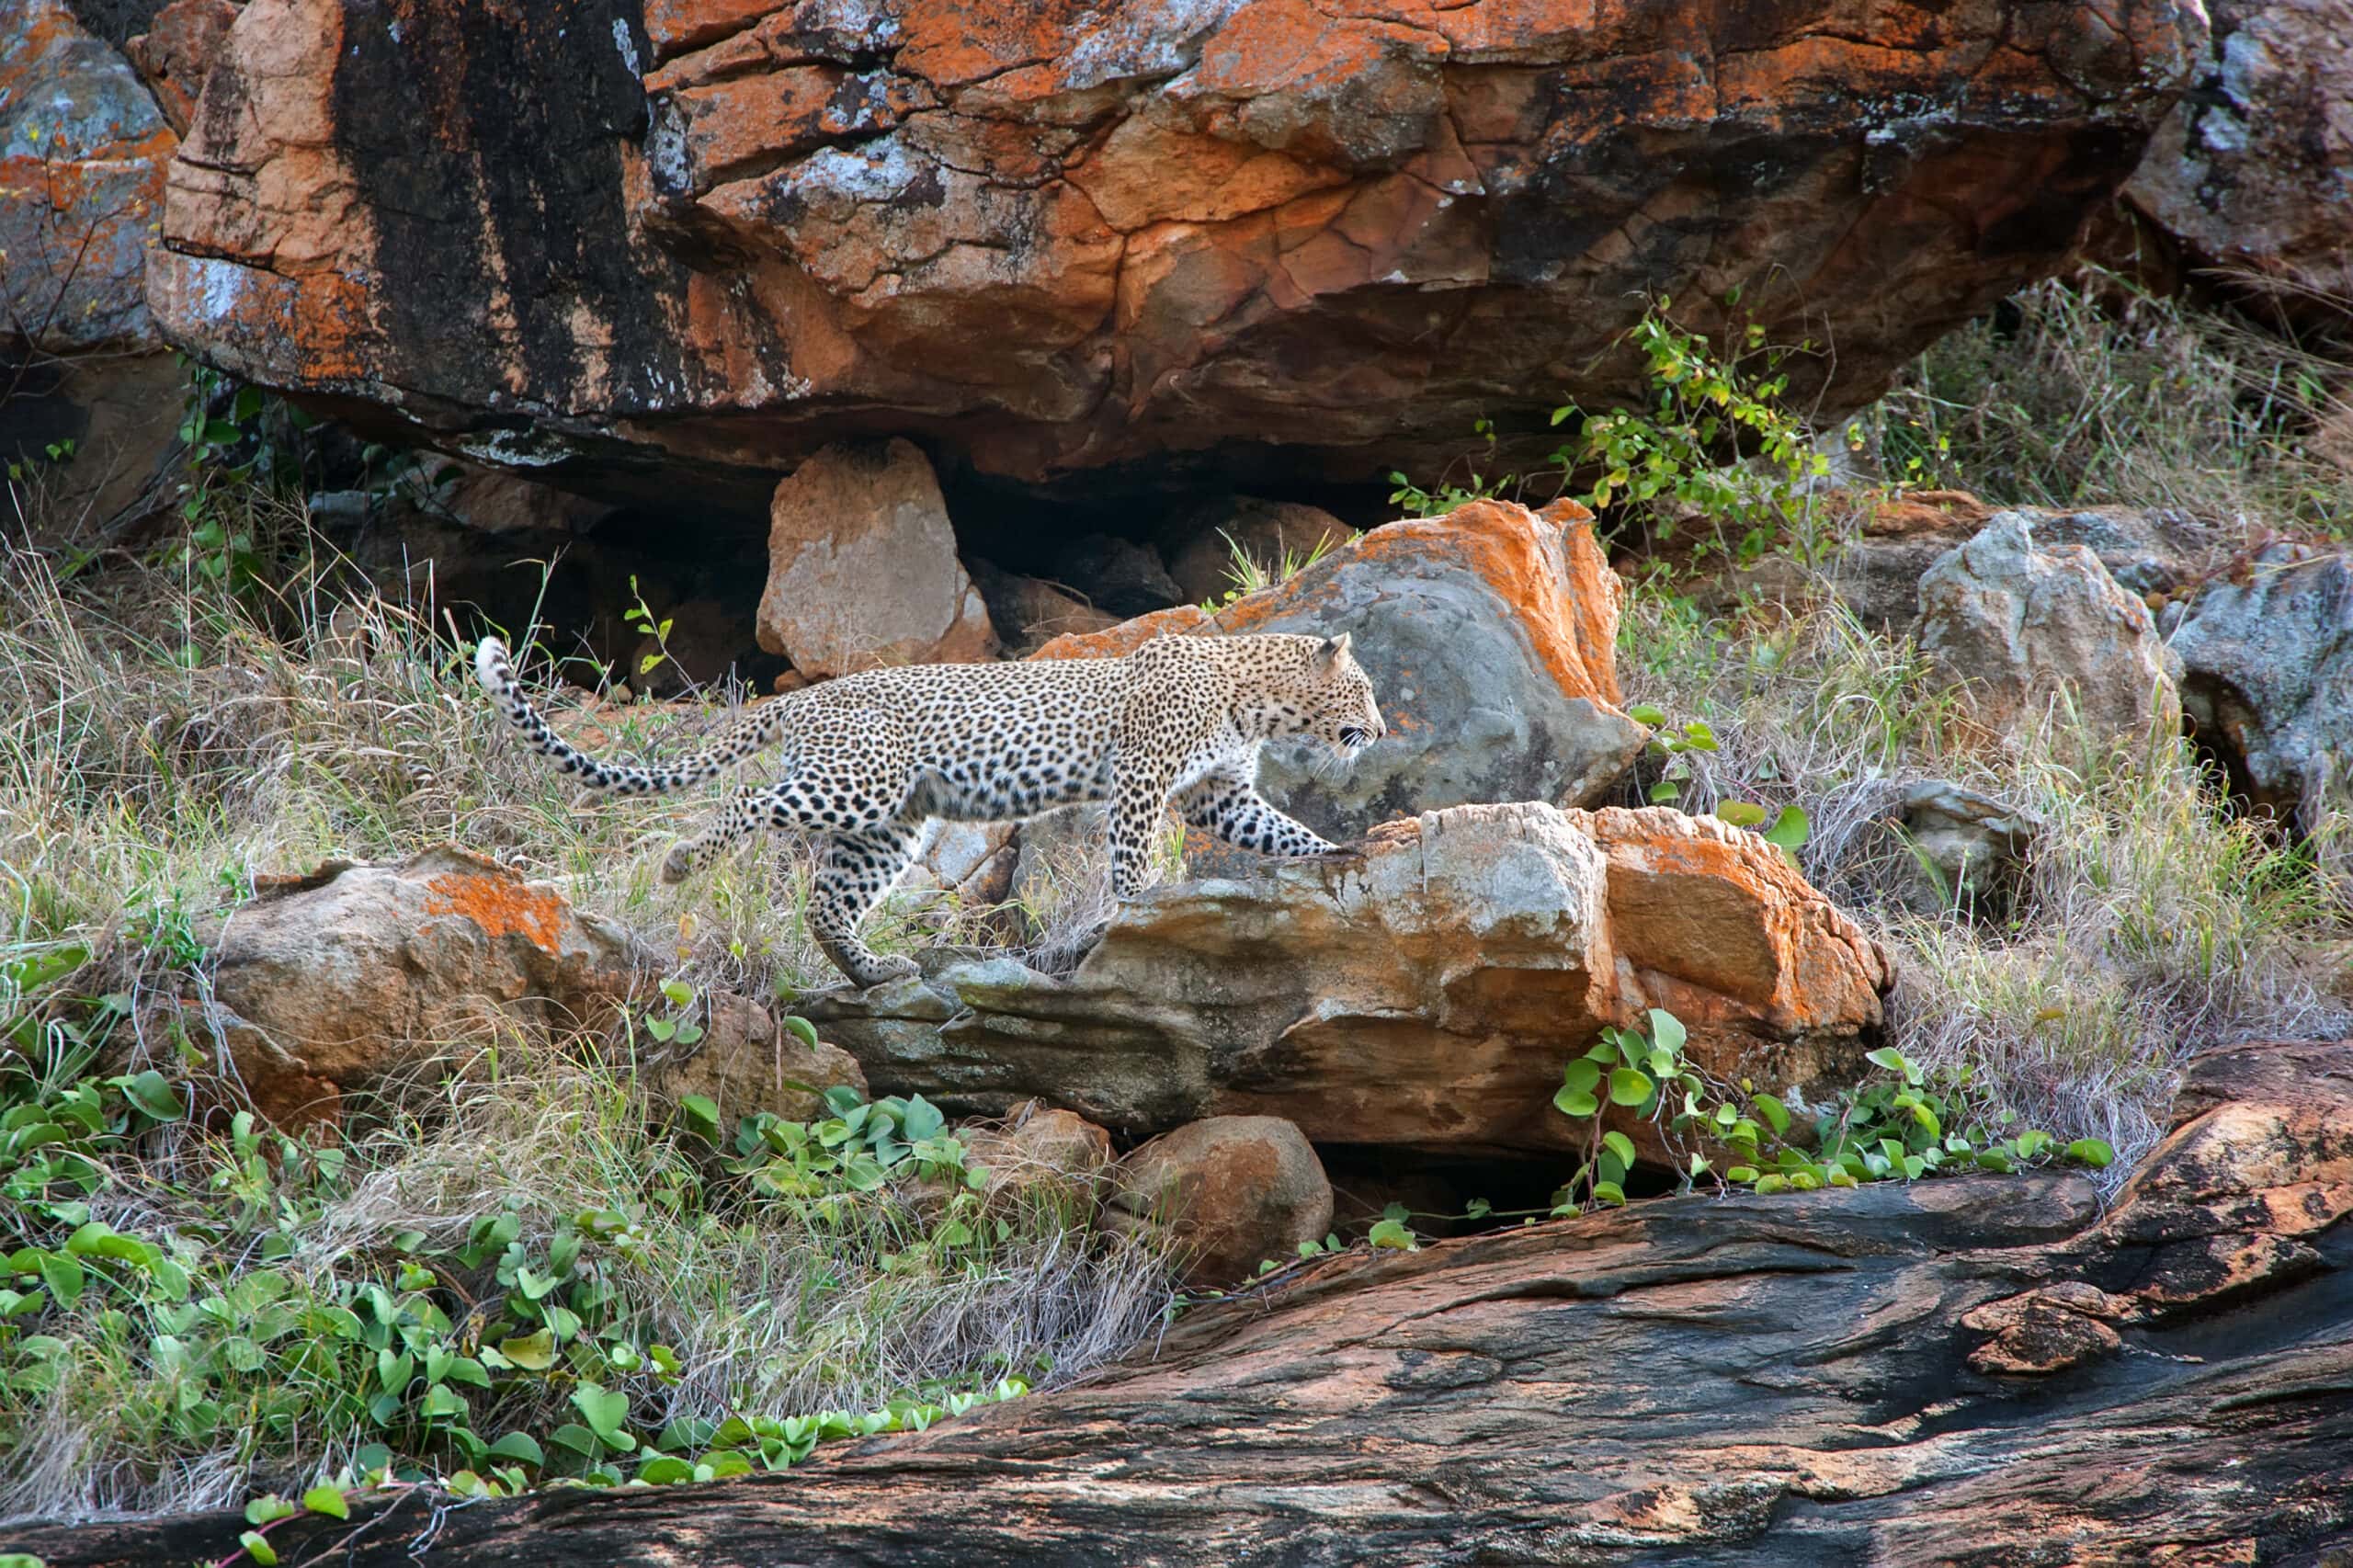 leopard in national park of kenya 2021 08 26 15 55 55 utc scaled